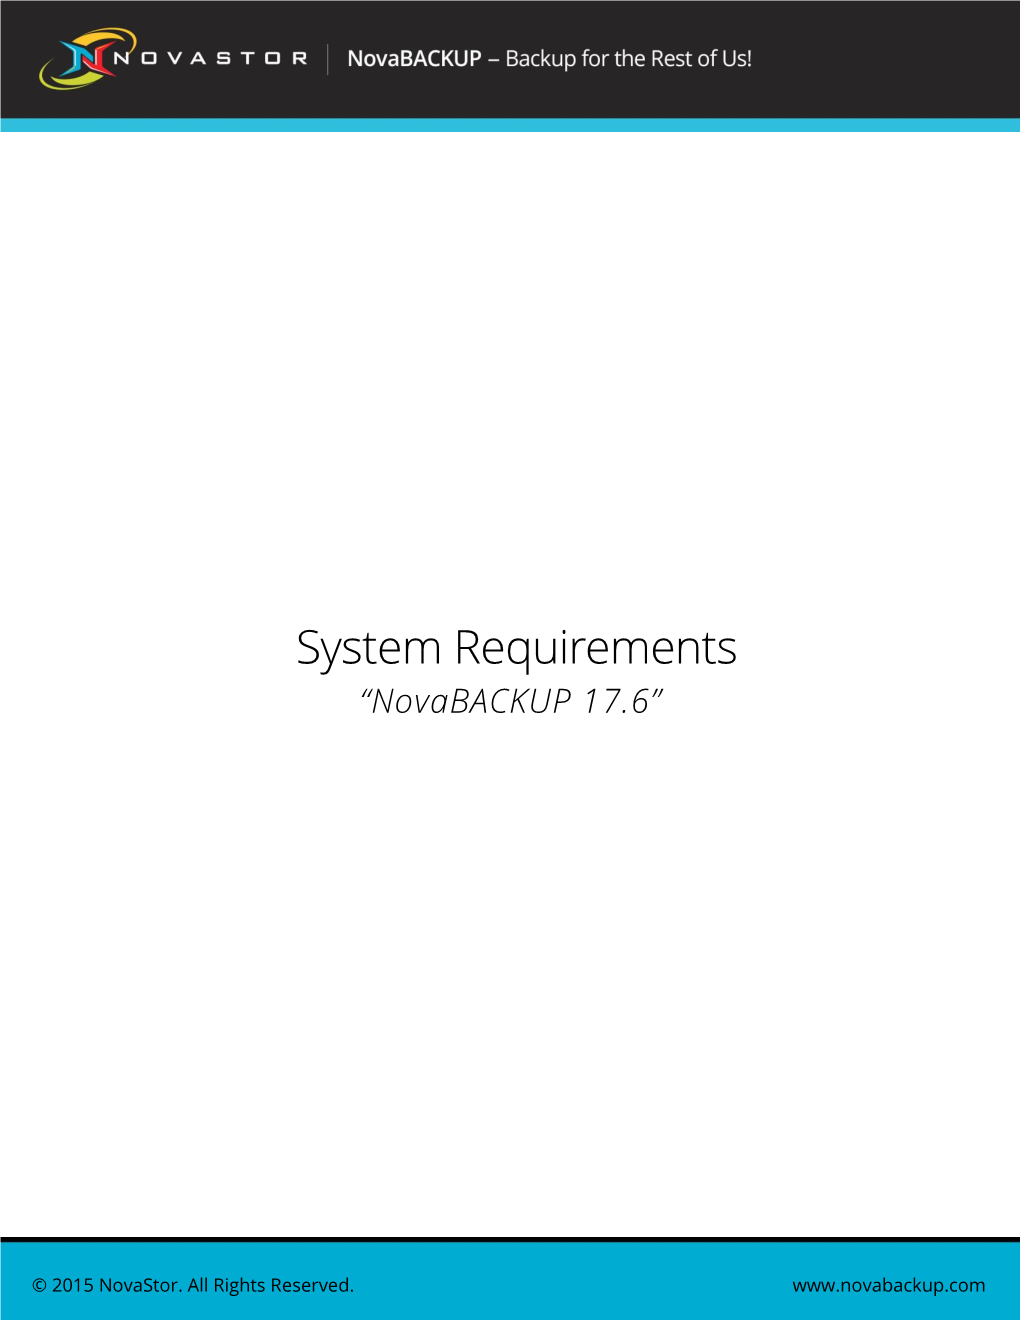 System Requirements “Novabackup 17.6”